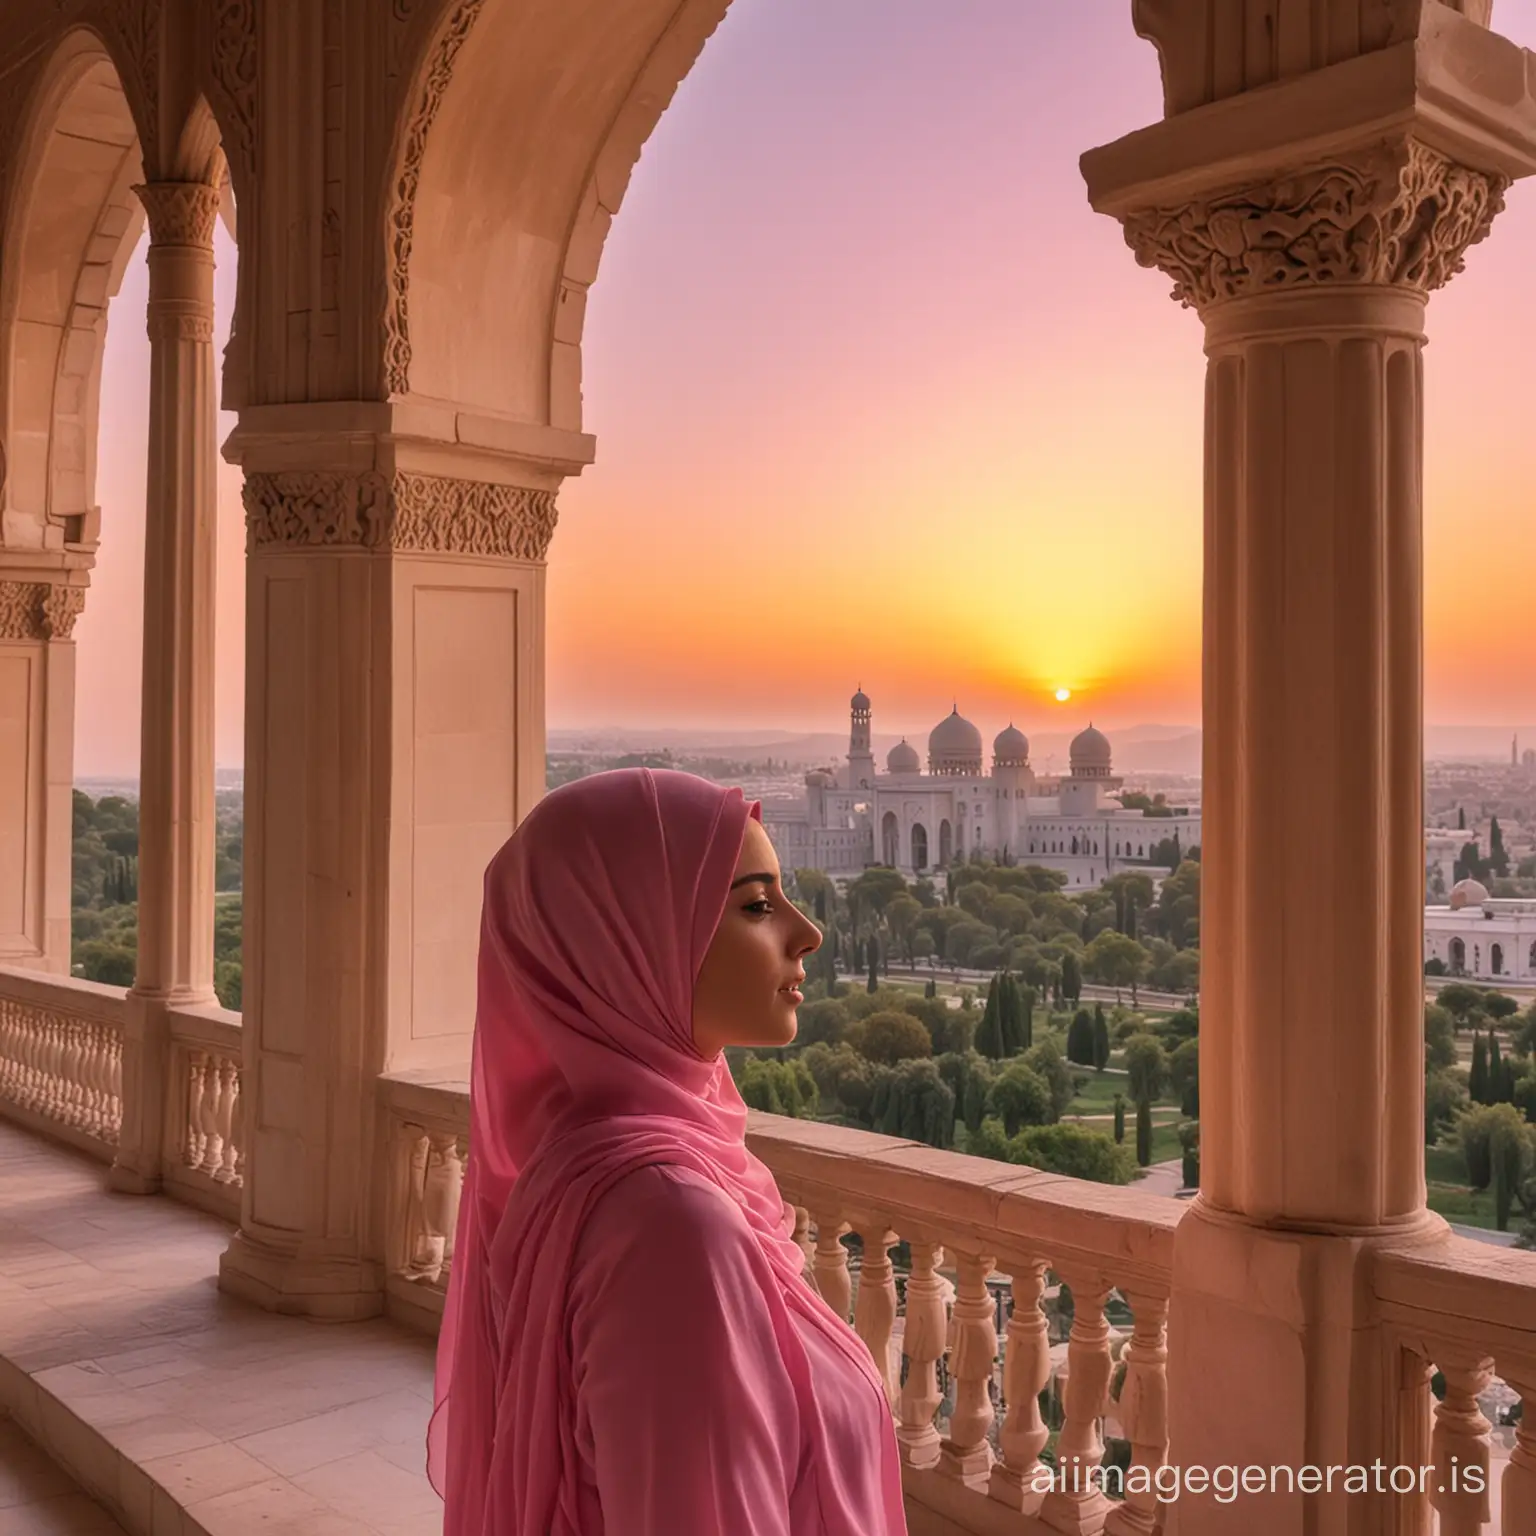 Lady-in-Pink-Hijab-Enjoying-Sunset-in-Palace